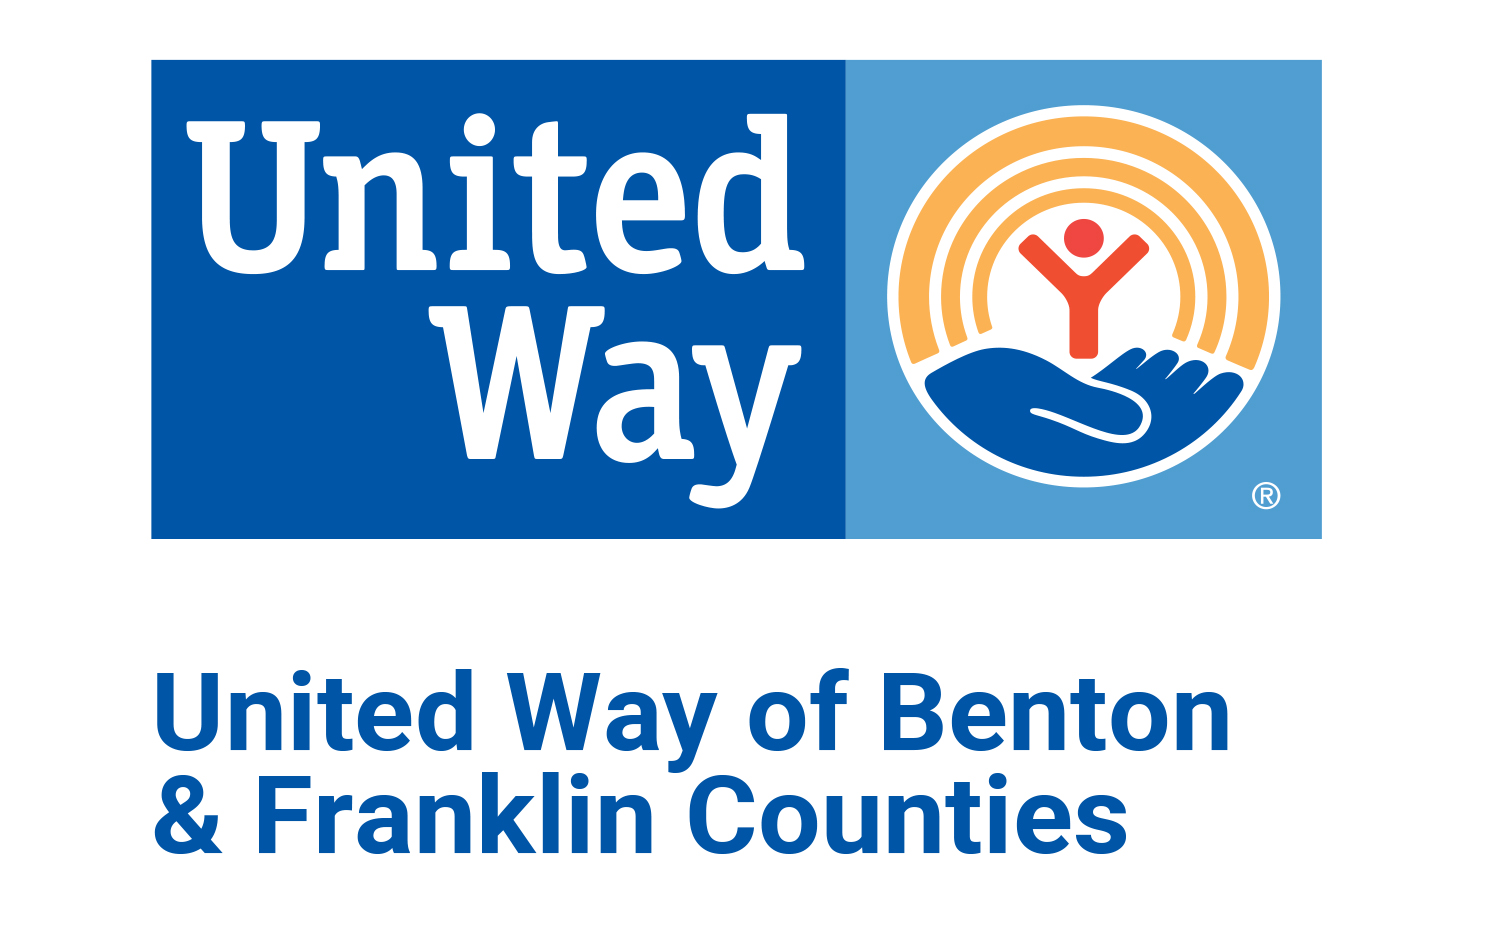 United Way of Benton & Franklin Counties